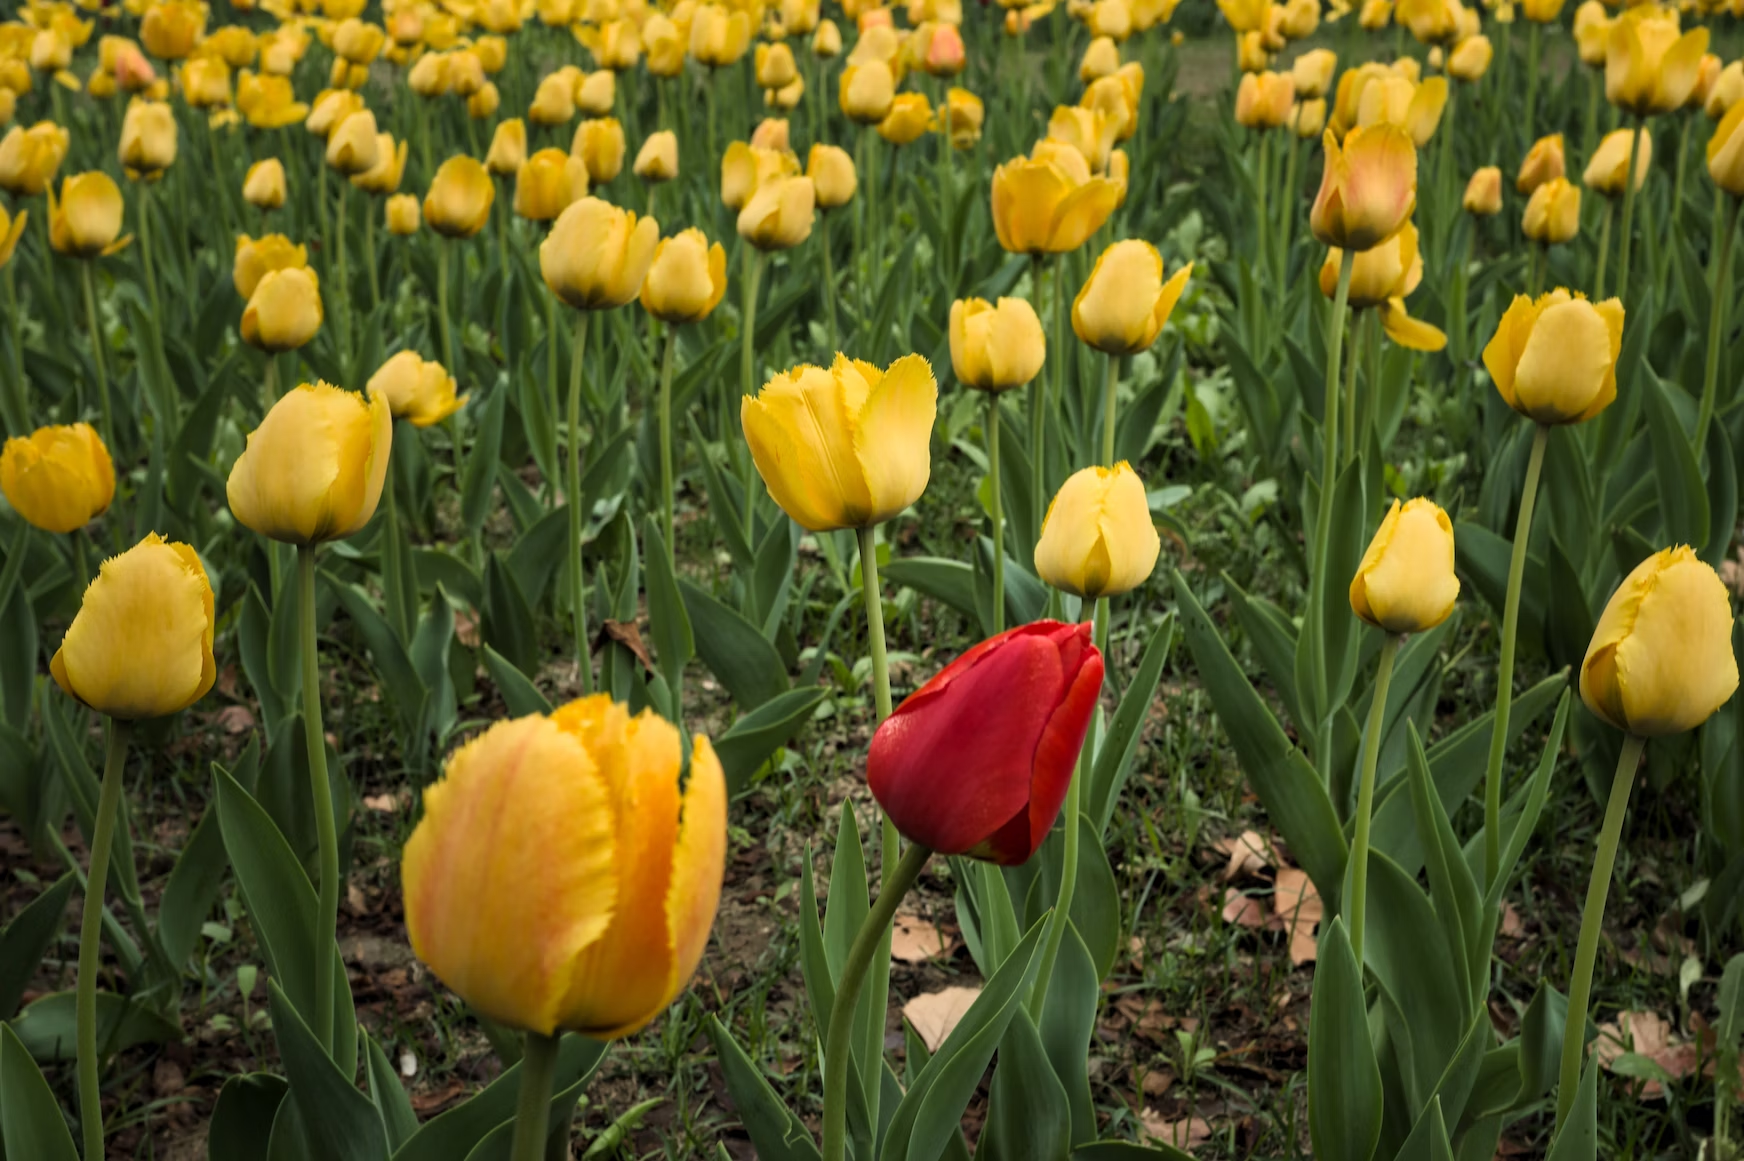 Tulipe rouge dans un champ de tulipes jaunes